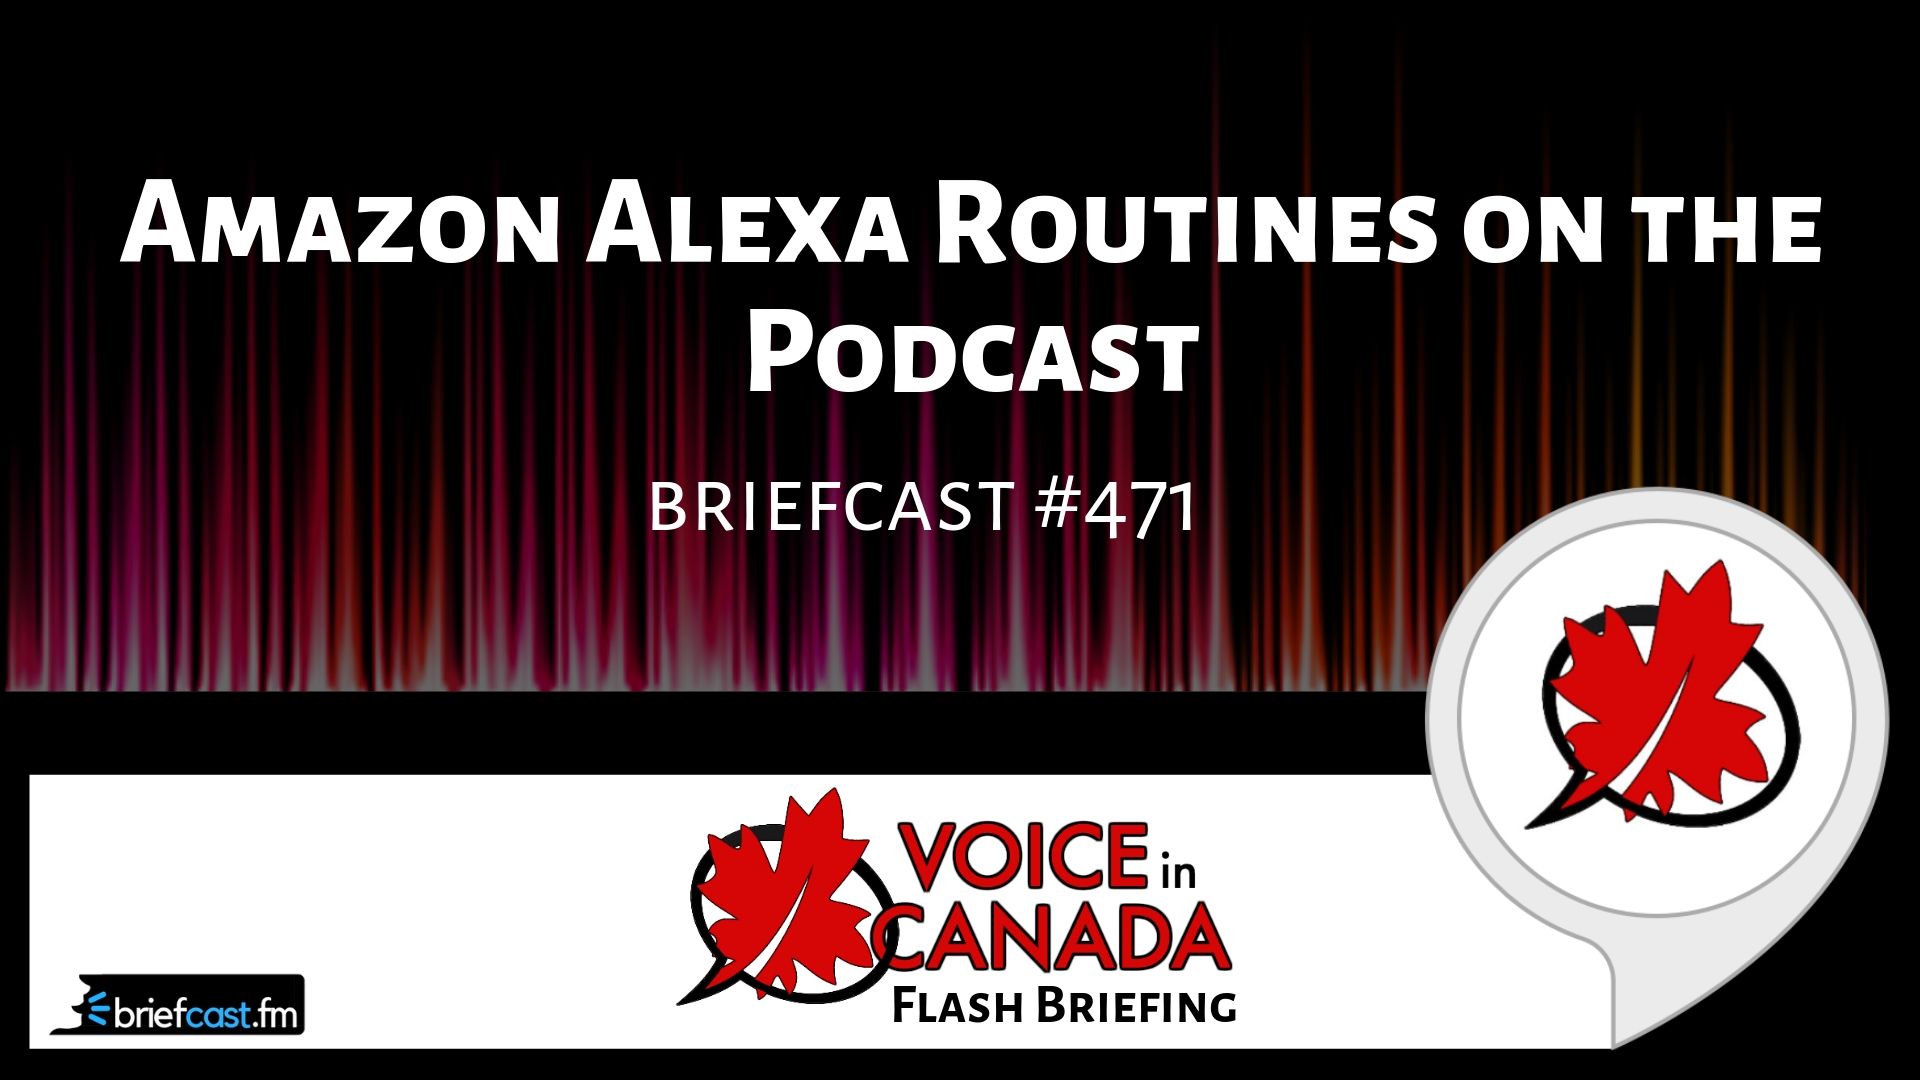 Amazon Alexa Routines on the Podcast